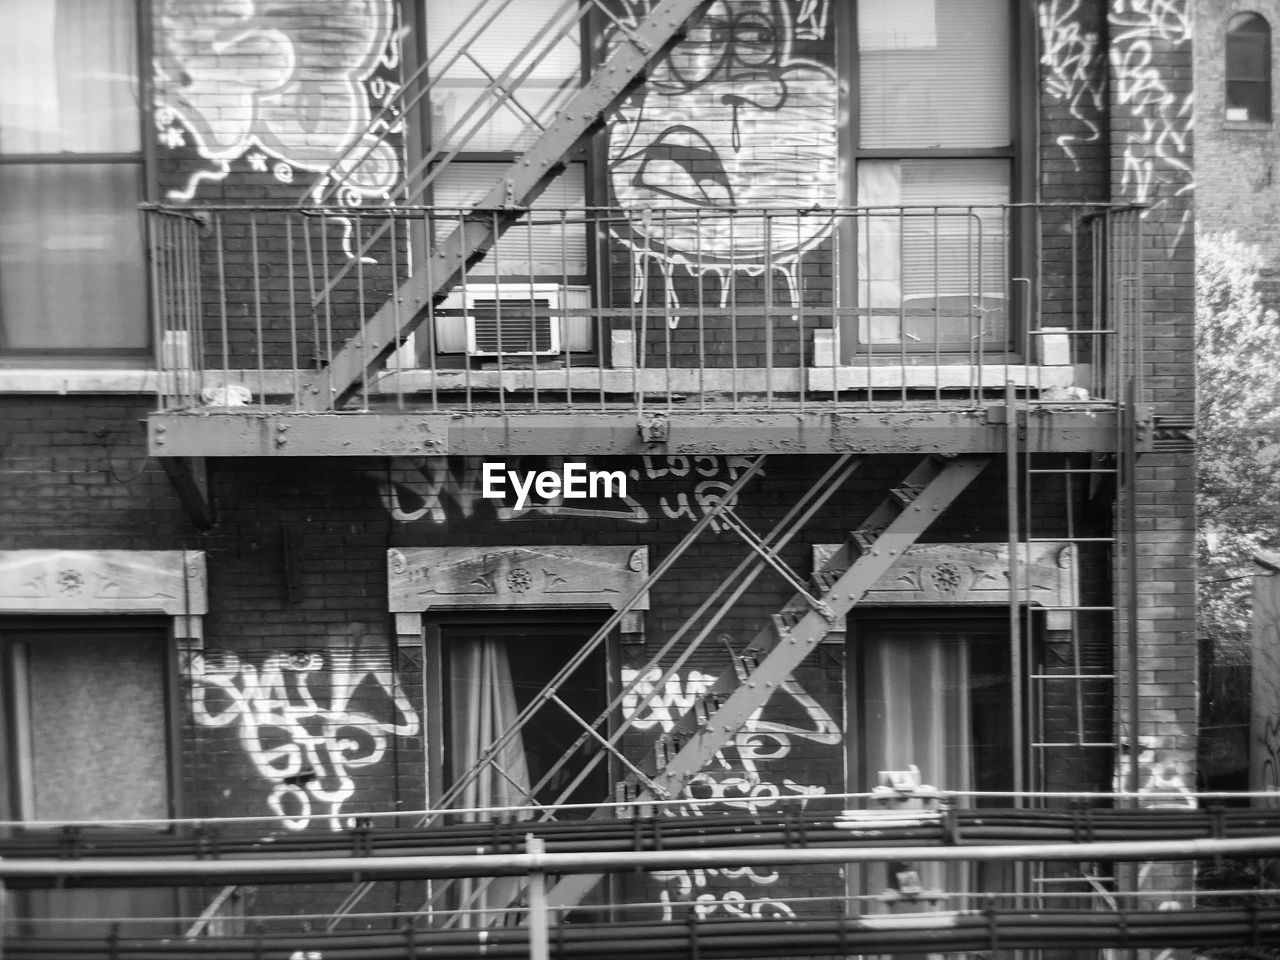 Graffiti on buildings in city